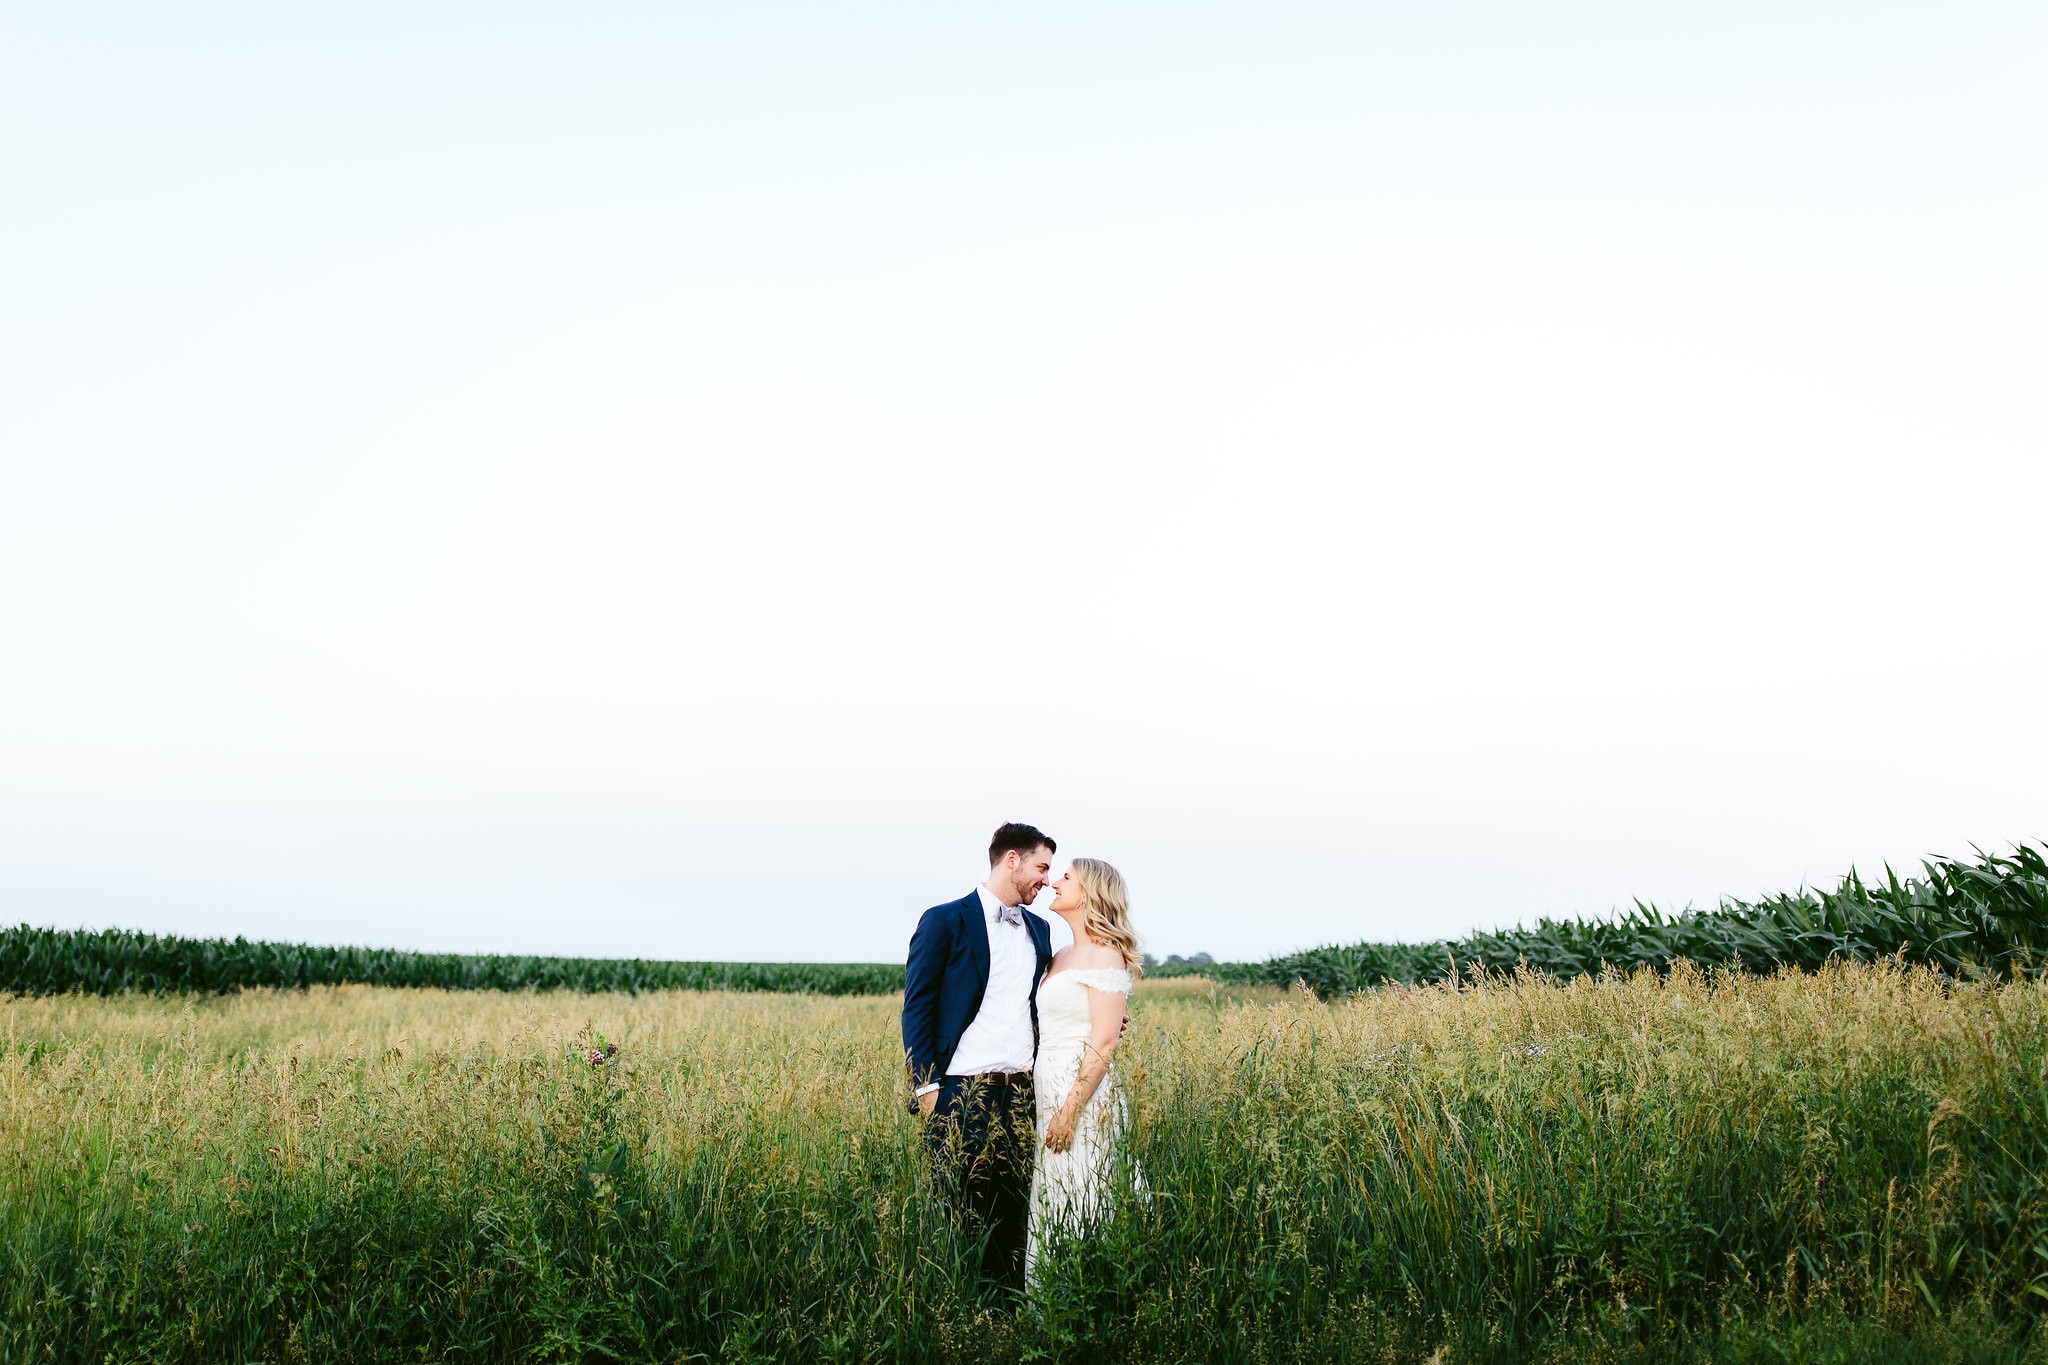 Nicodem-Creative-Wedding-Photography-Champaign-University-of-Illinois-Inspiration-Pear-Tree-Estate-Illini-Hillary-Rae-Events-Flowers-by-Kristine-Meg-and-Matt